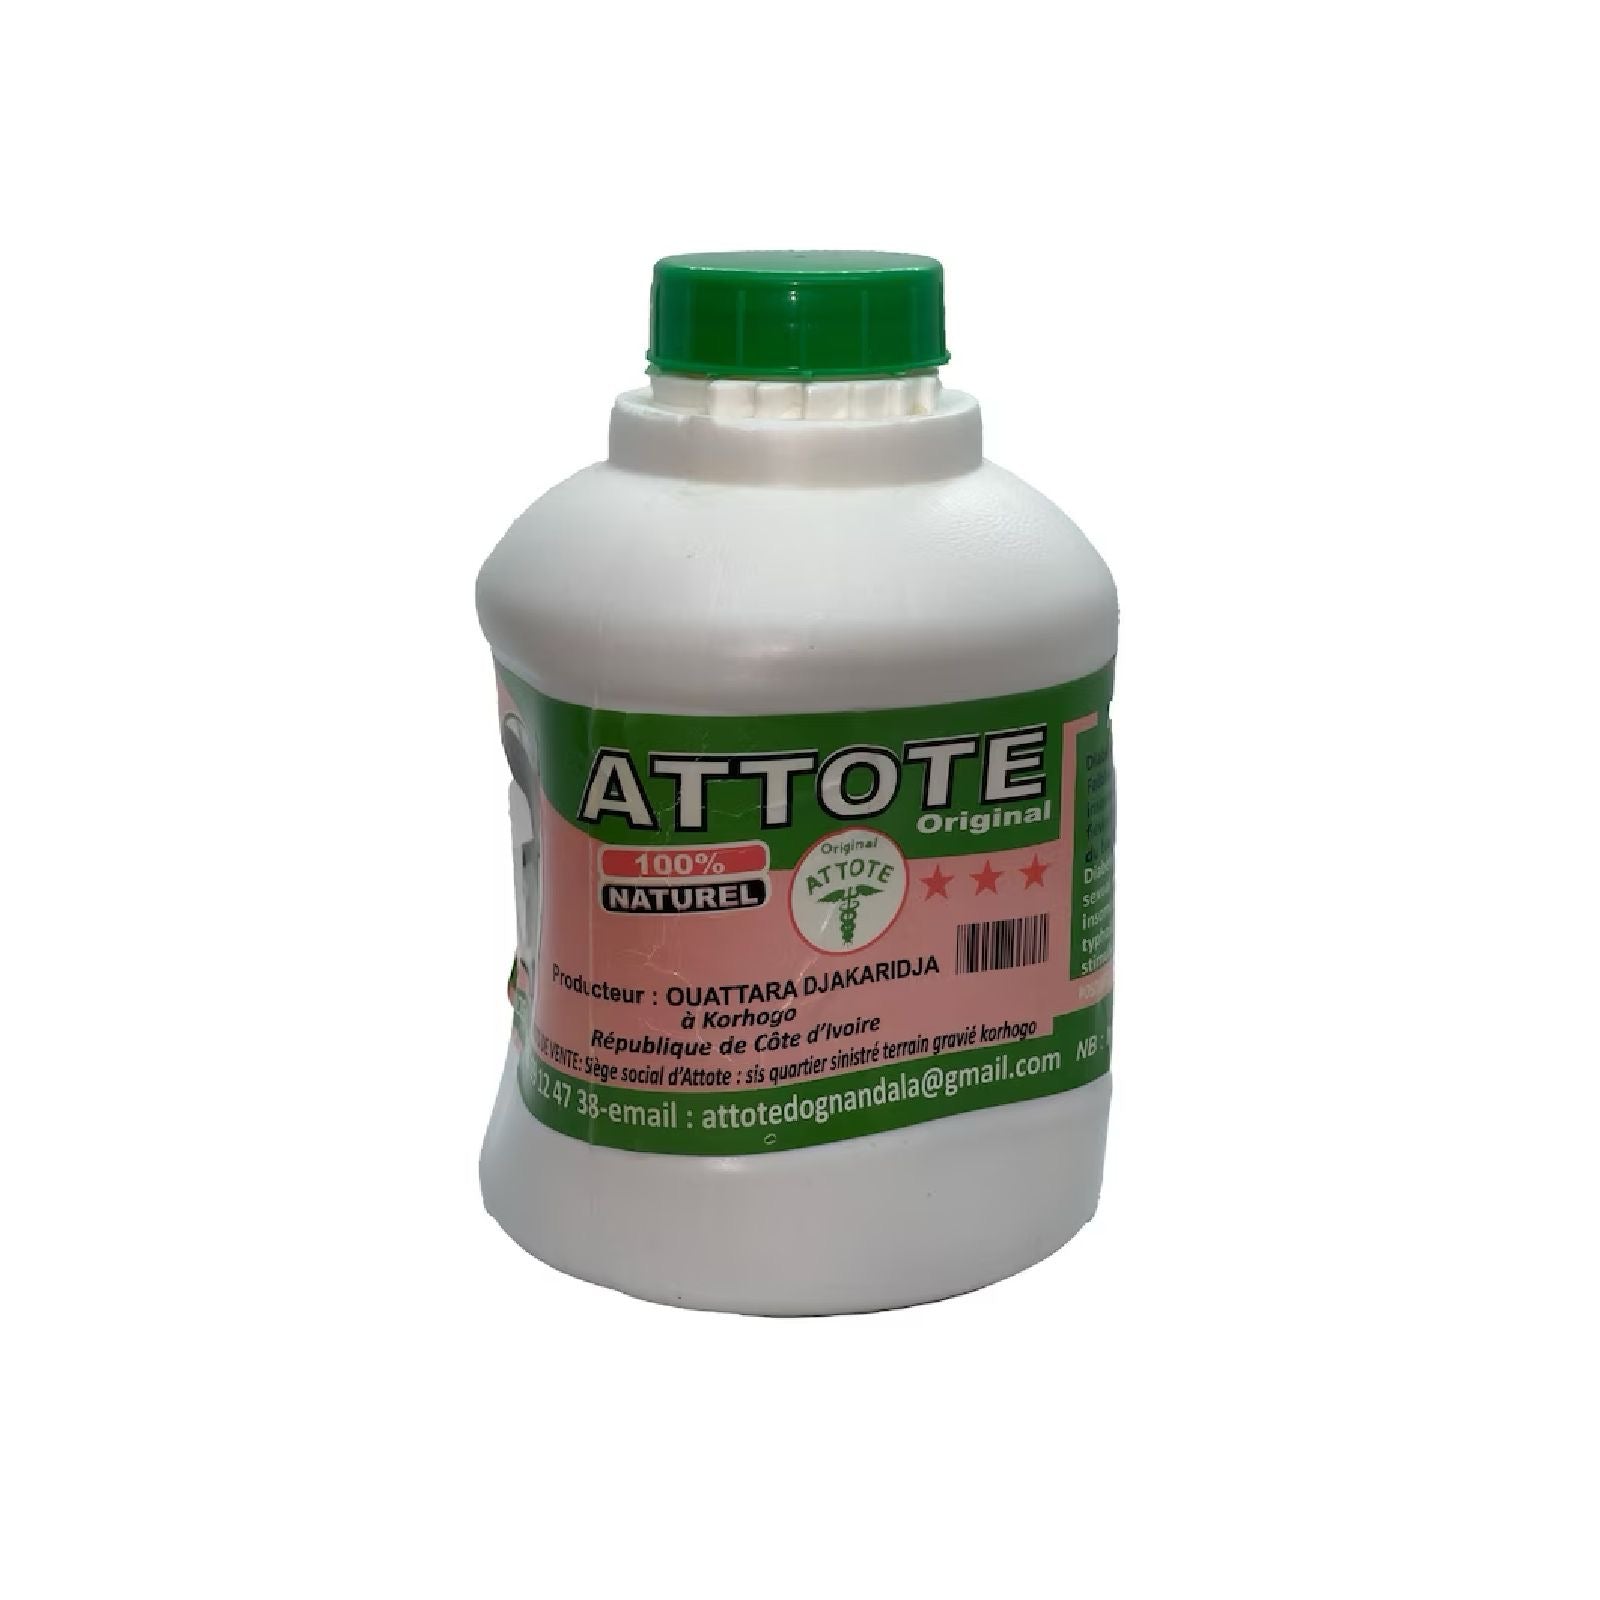 Attot-jus - The Powerfull Juice